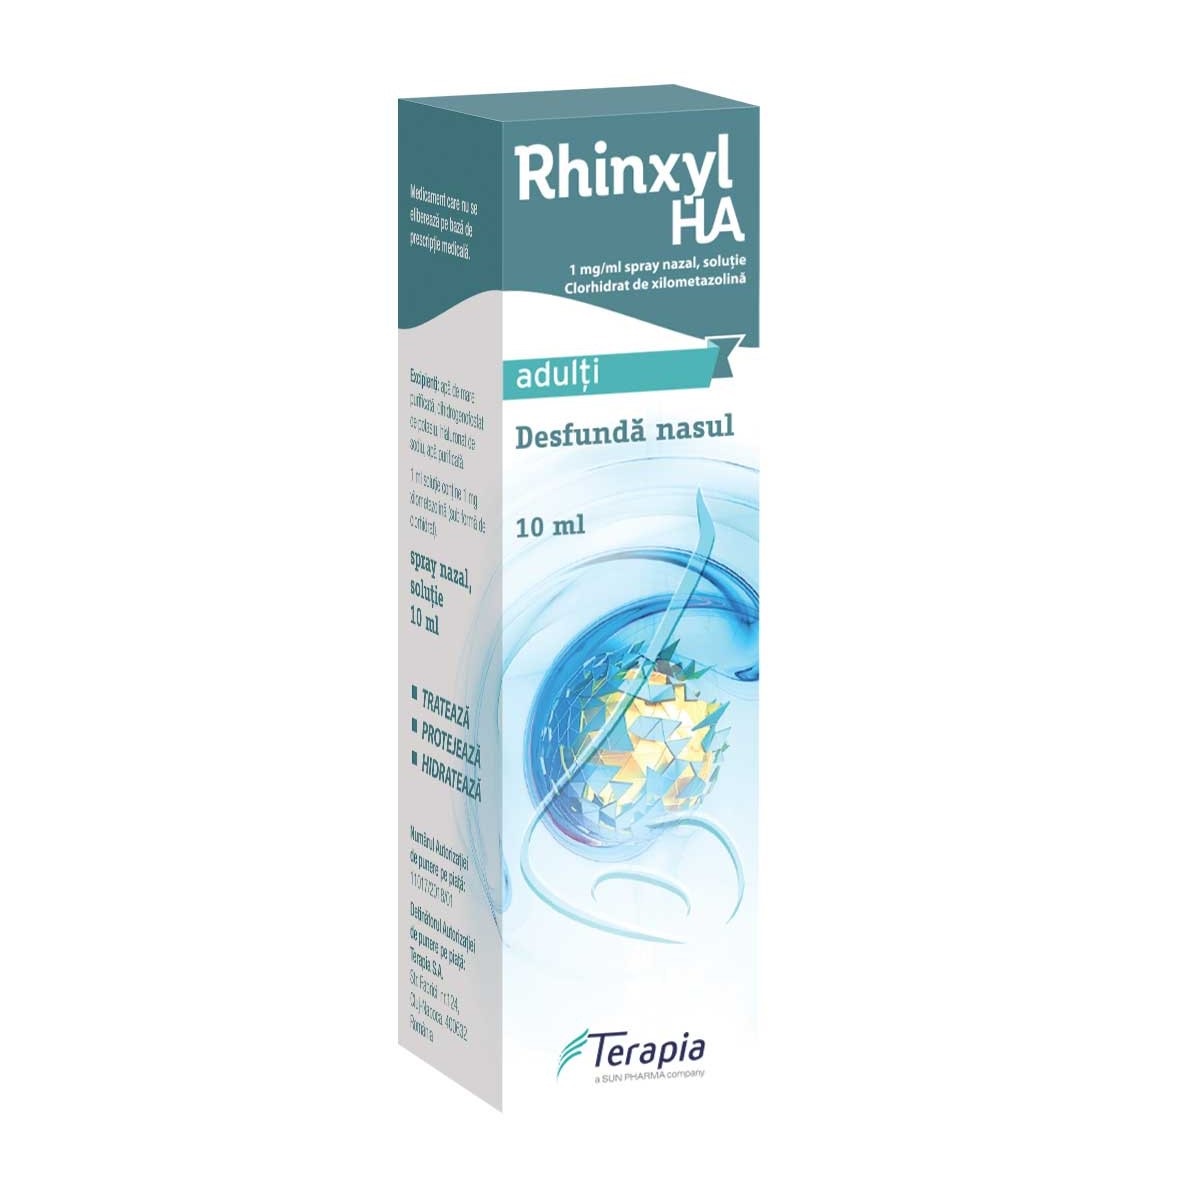 Sistemul respirator - Rhinxyl Ha spray nazal solutie, 1 mg/ml, 10 ml, Terapia, nordpharm.ro